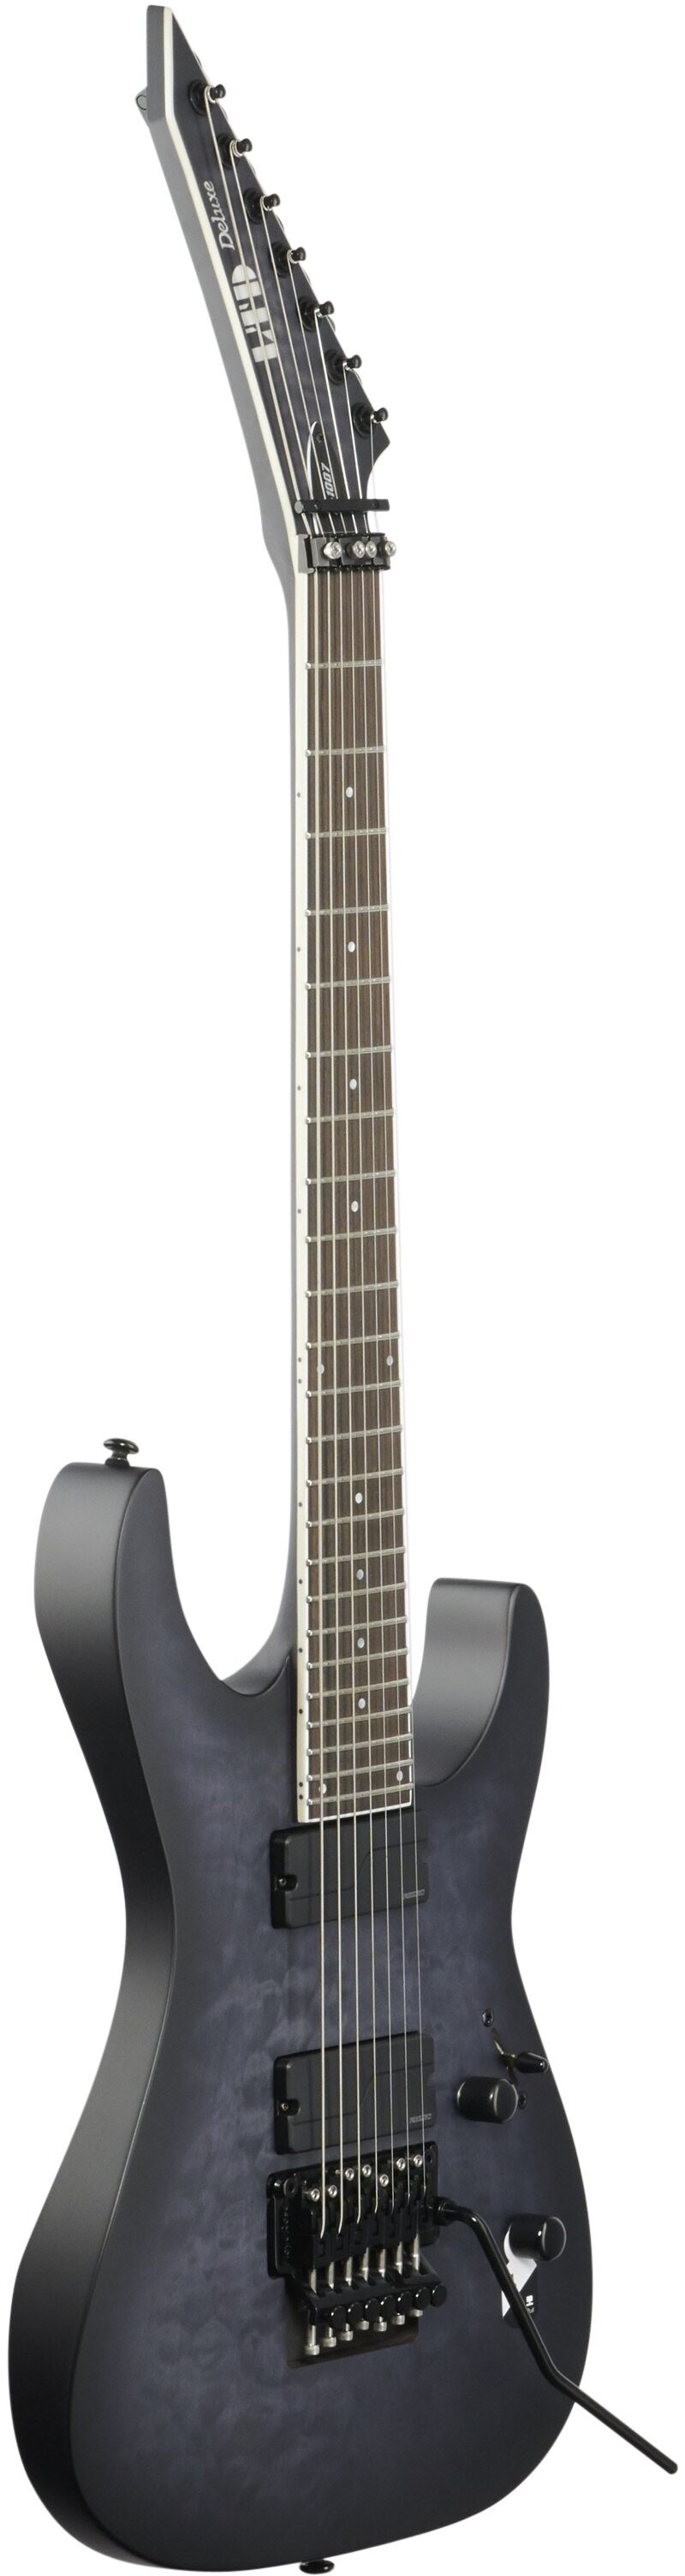 ESP LTD M-1007QM Electric Guitar, 7-String | zZounds